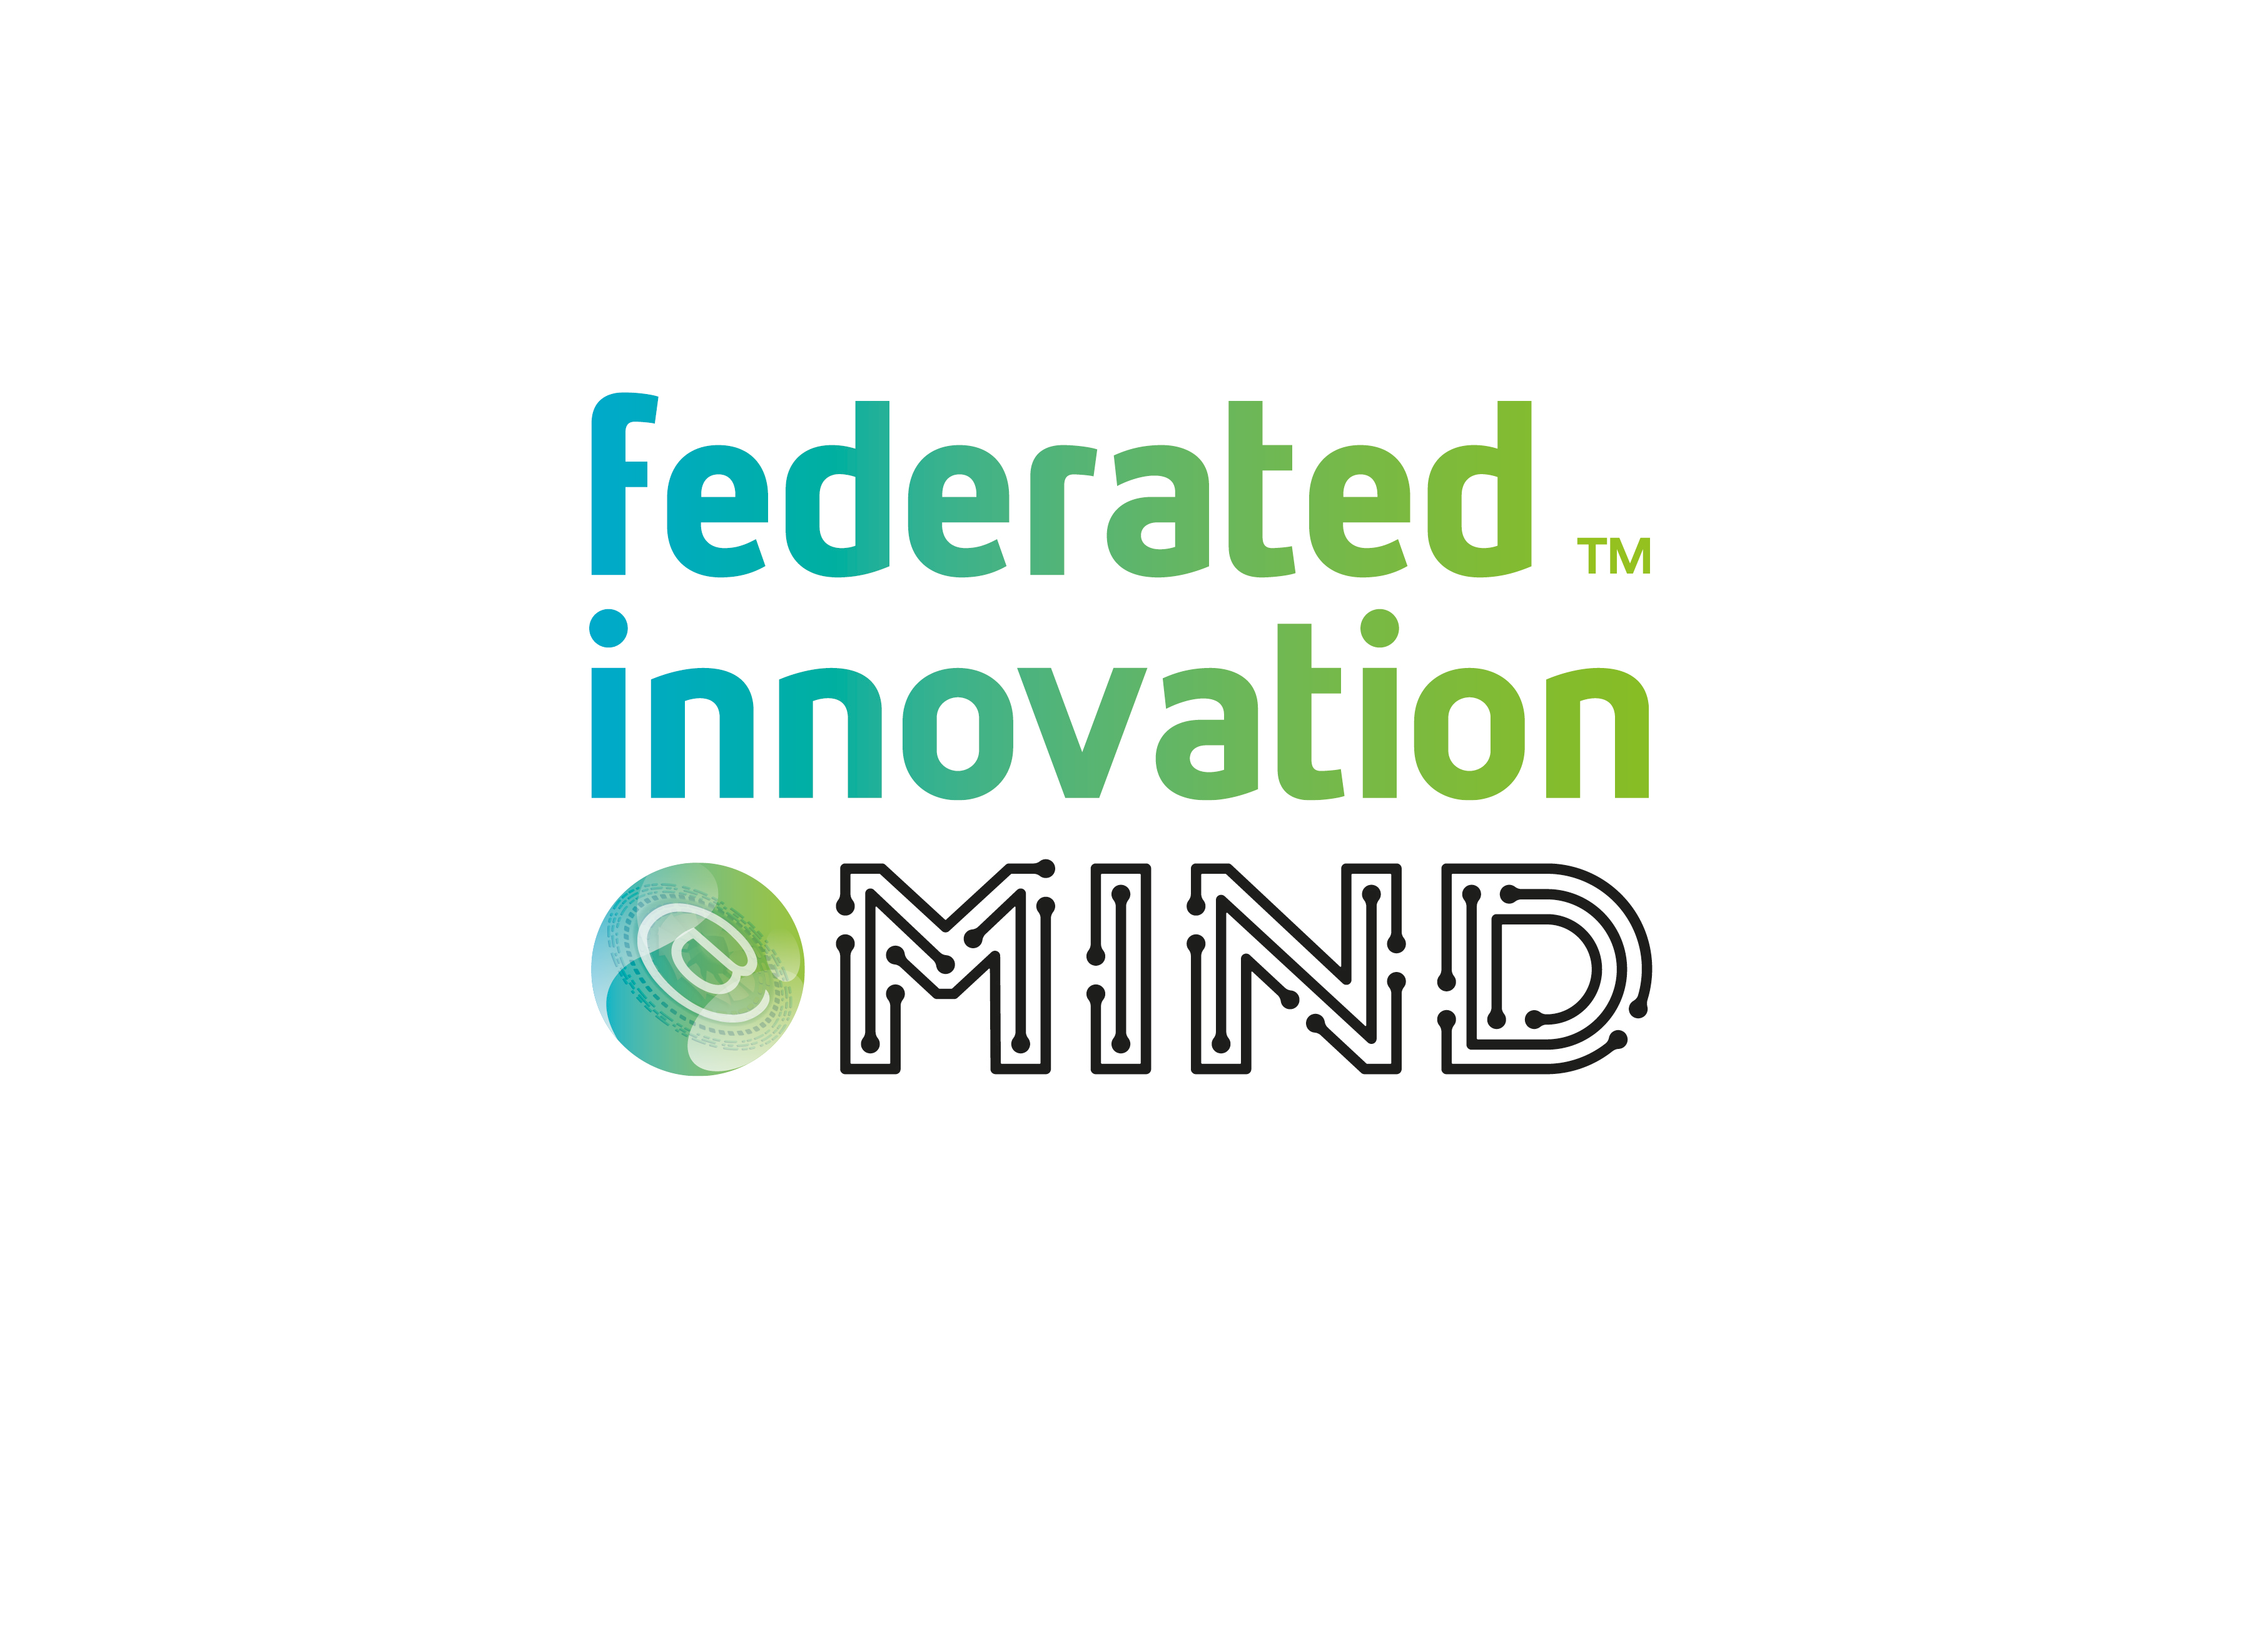 Federated Innovation @MIND